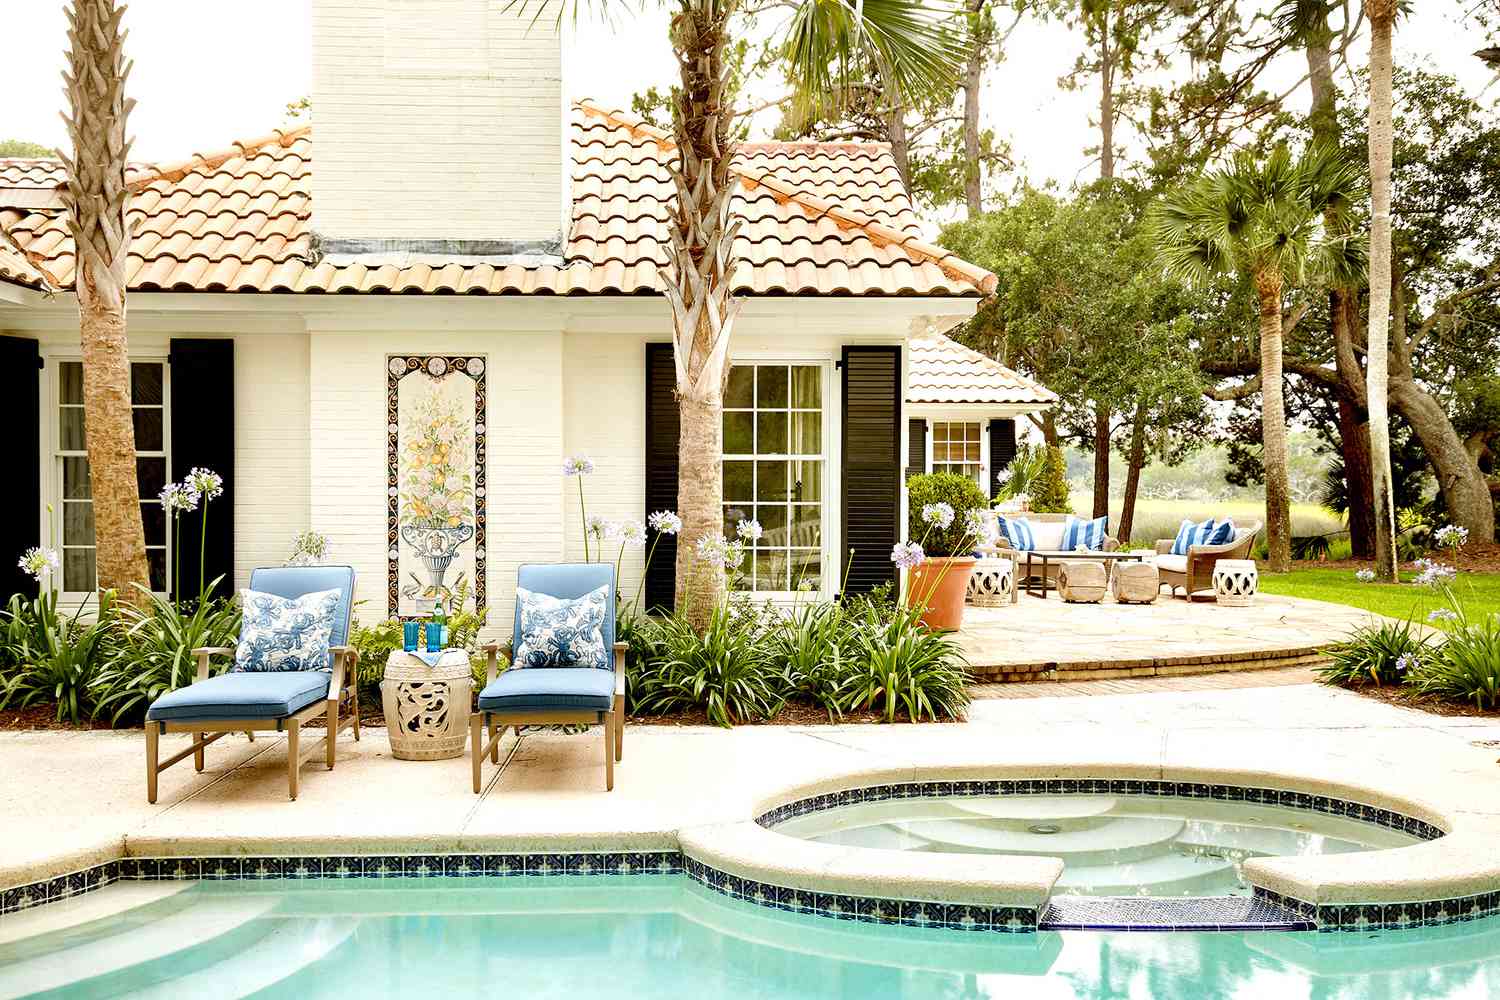 Backyard with pool and lounge chairs